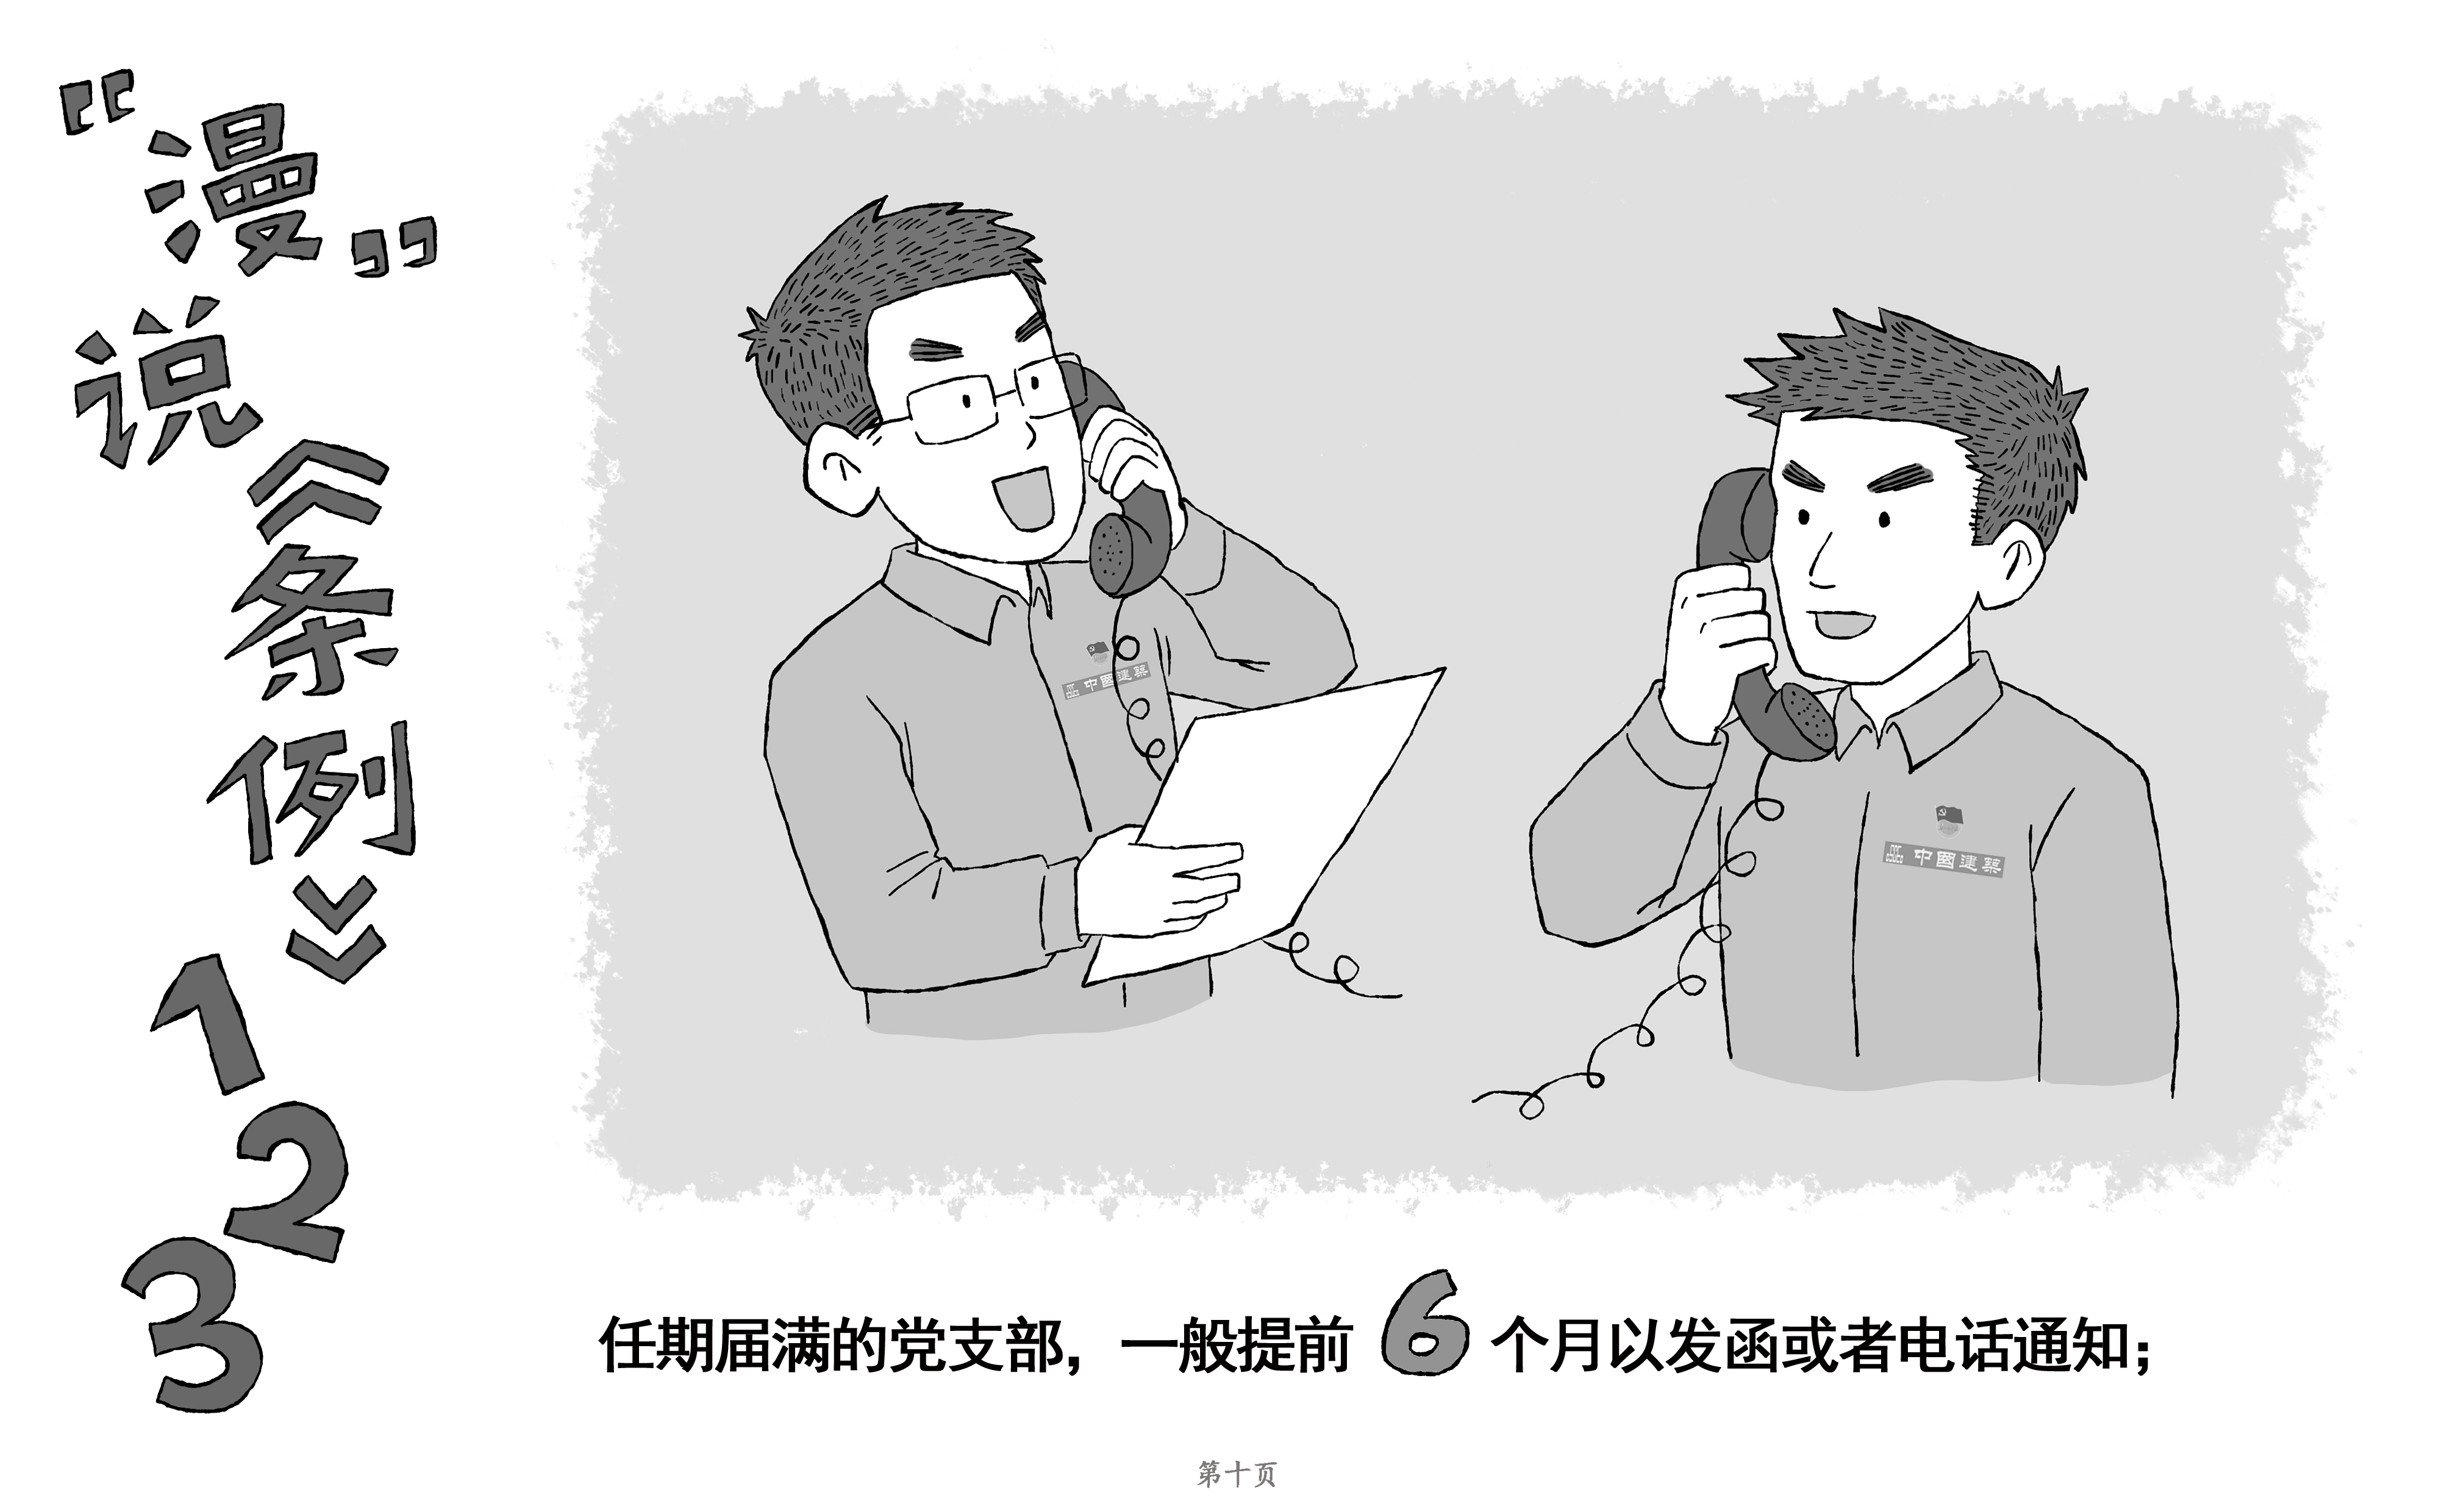 [PPT]中建二局装饰工程有限公司《“数”说《条例》原创漫画——中国共产党支部工作条例》